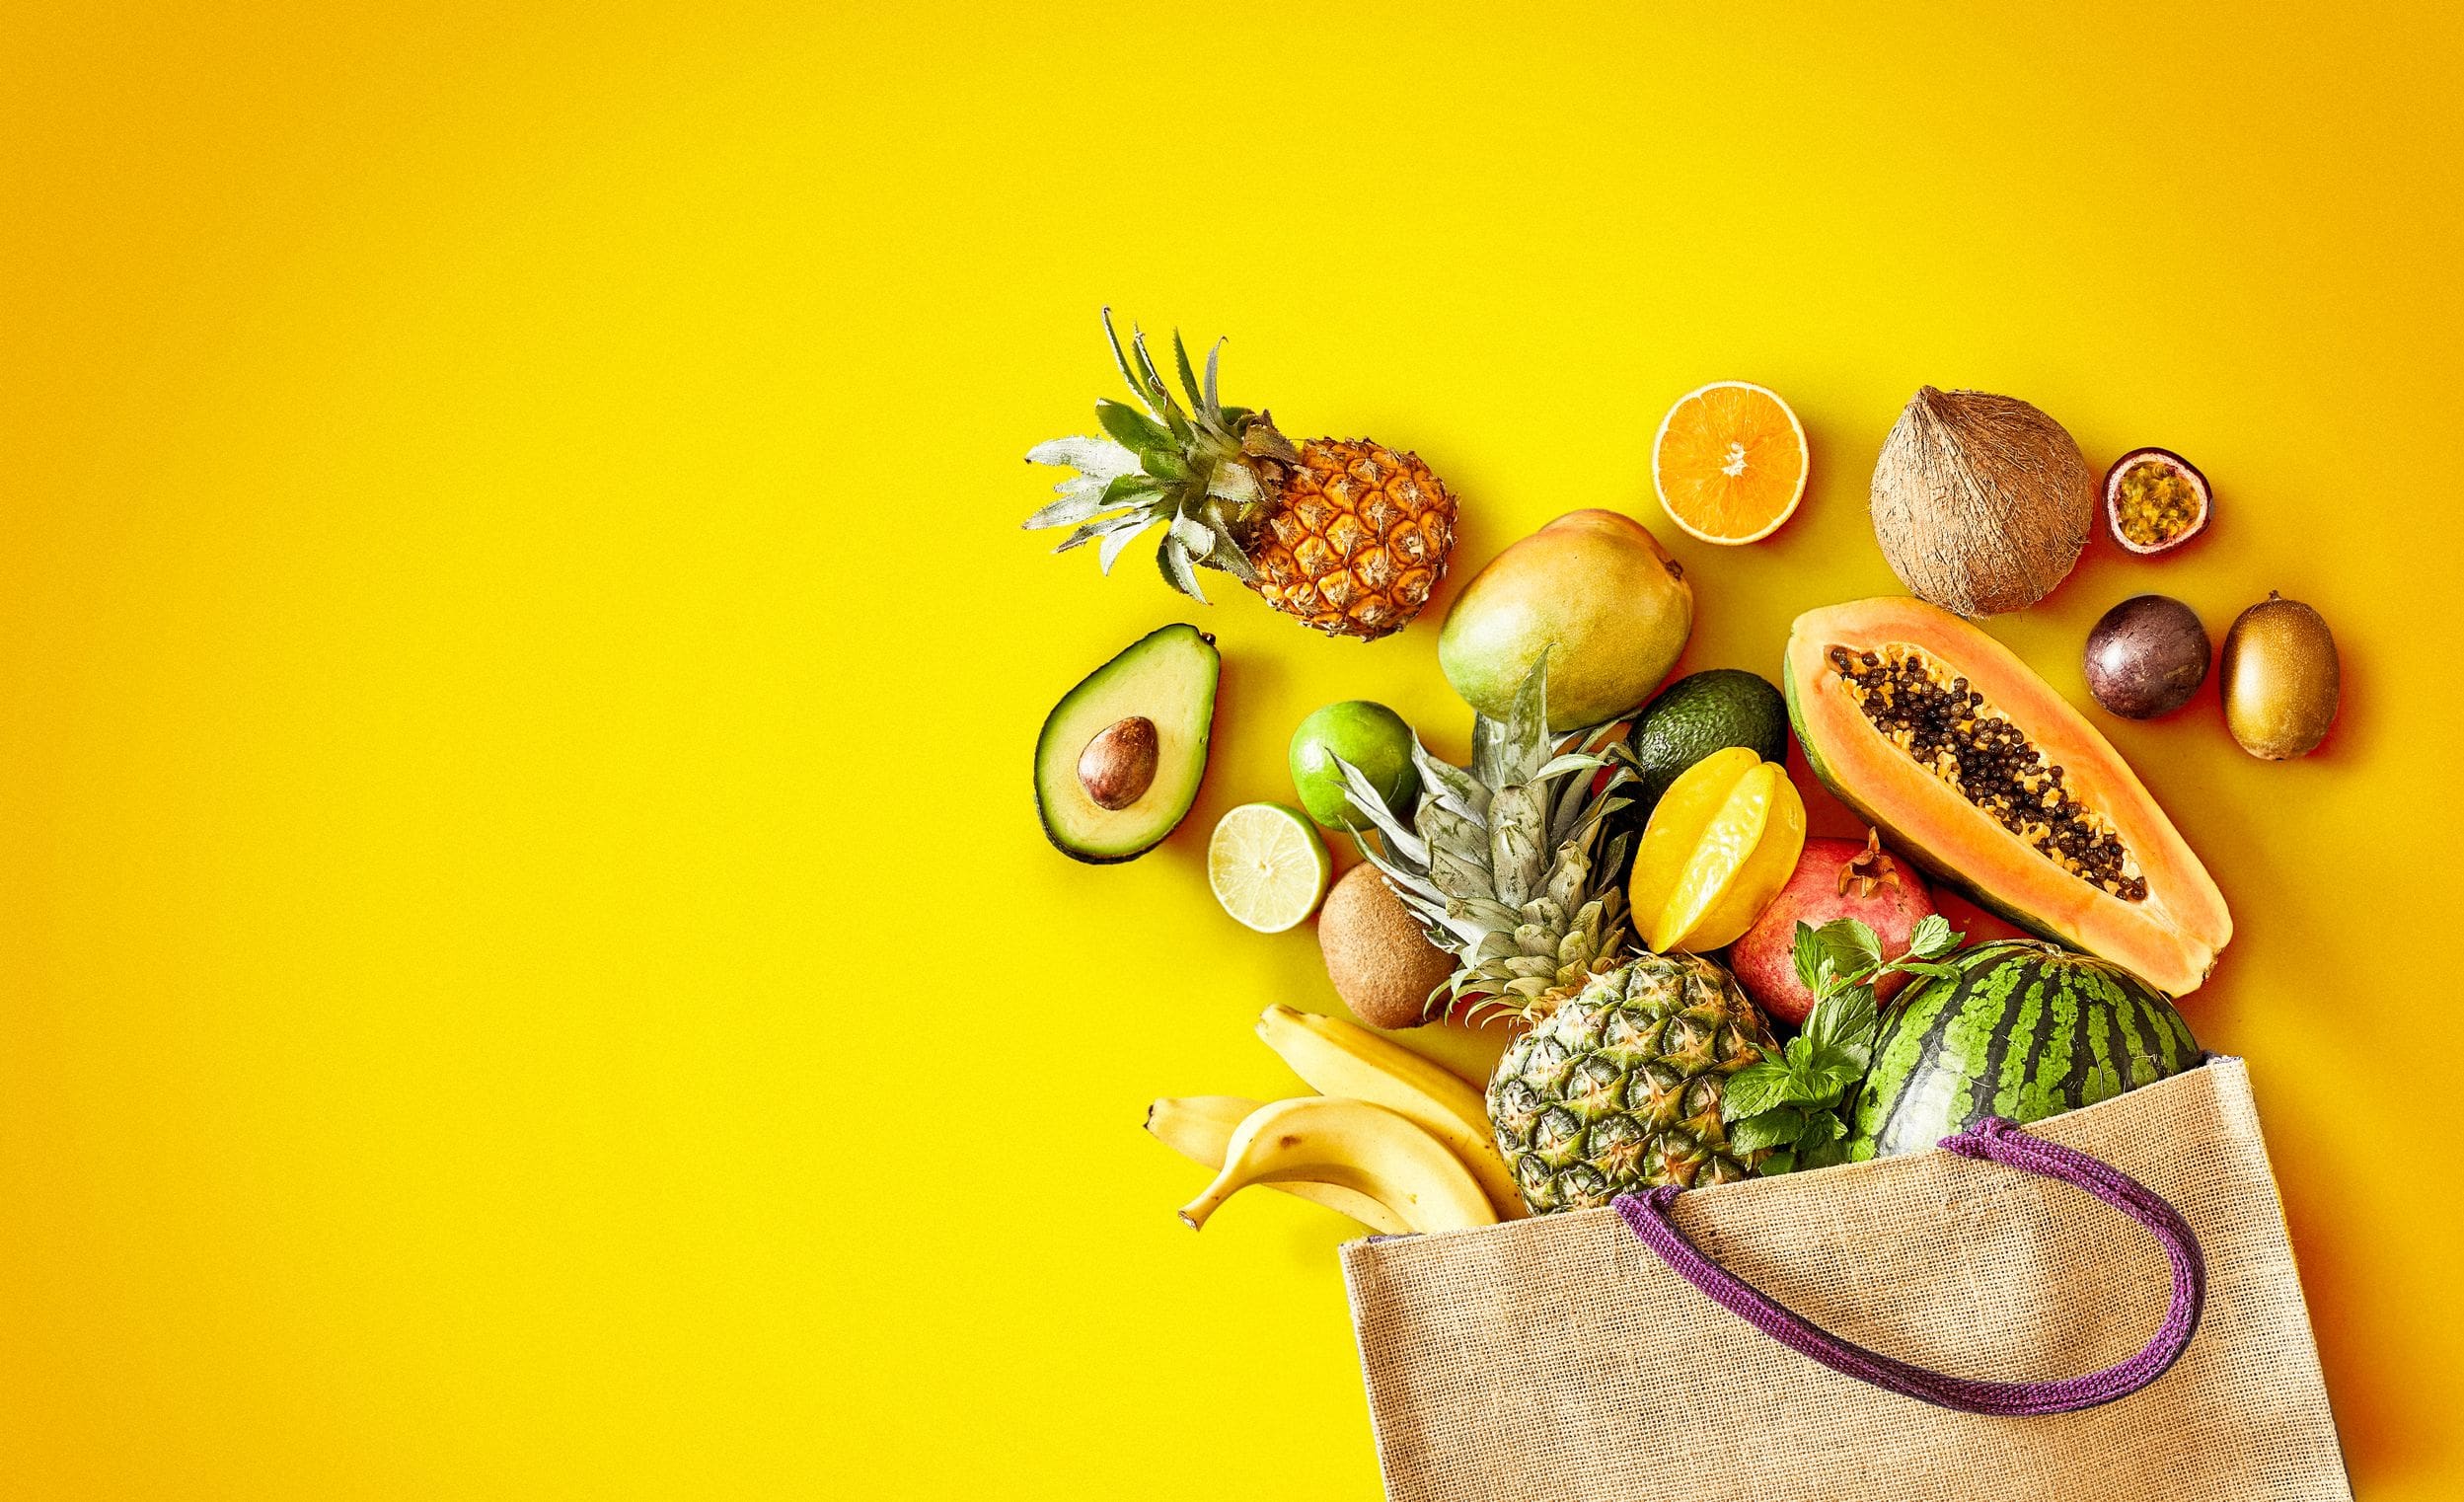 More fruit for less diabetes